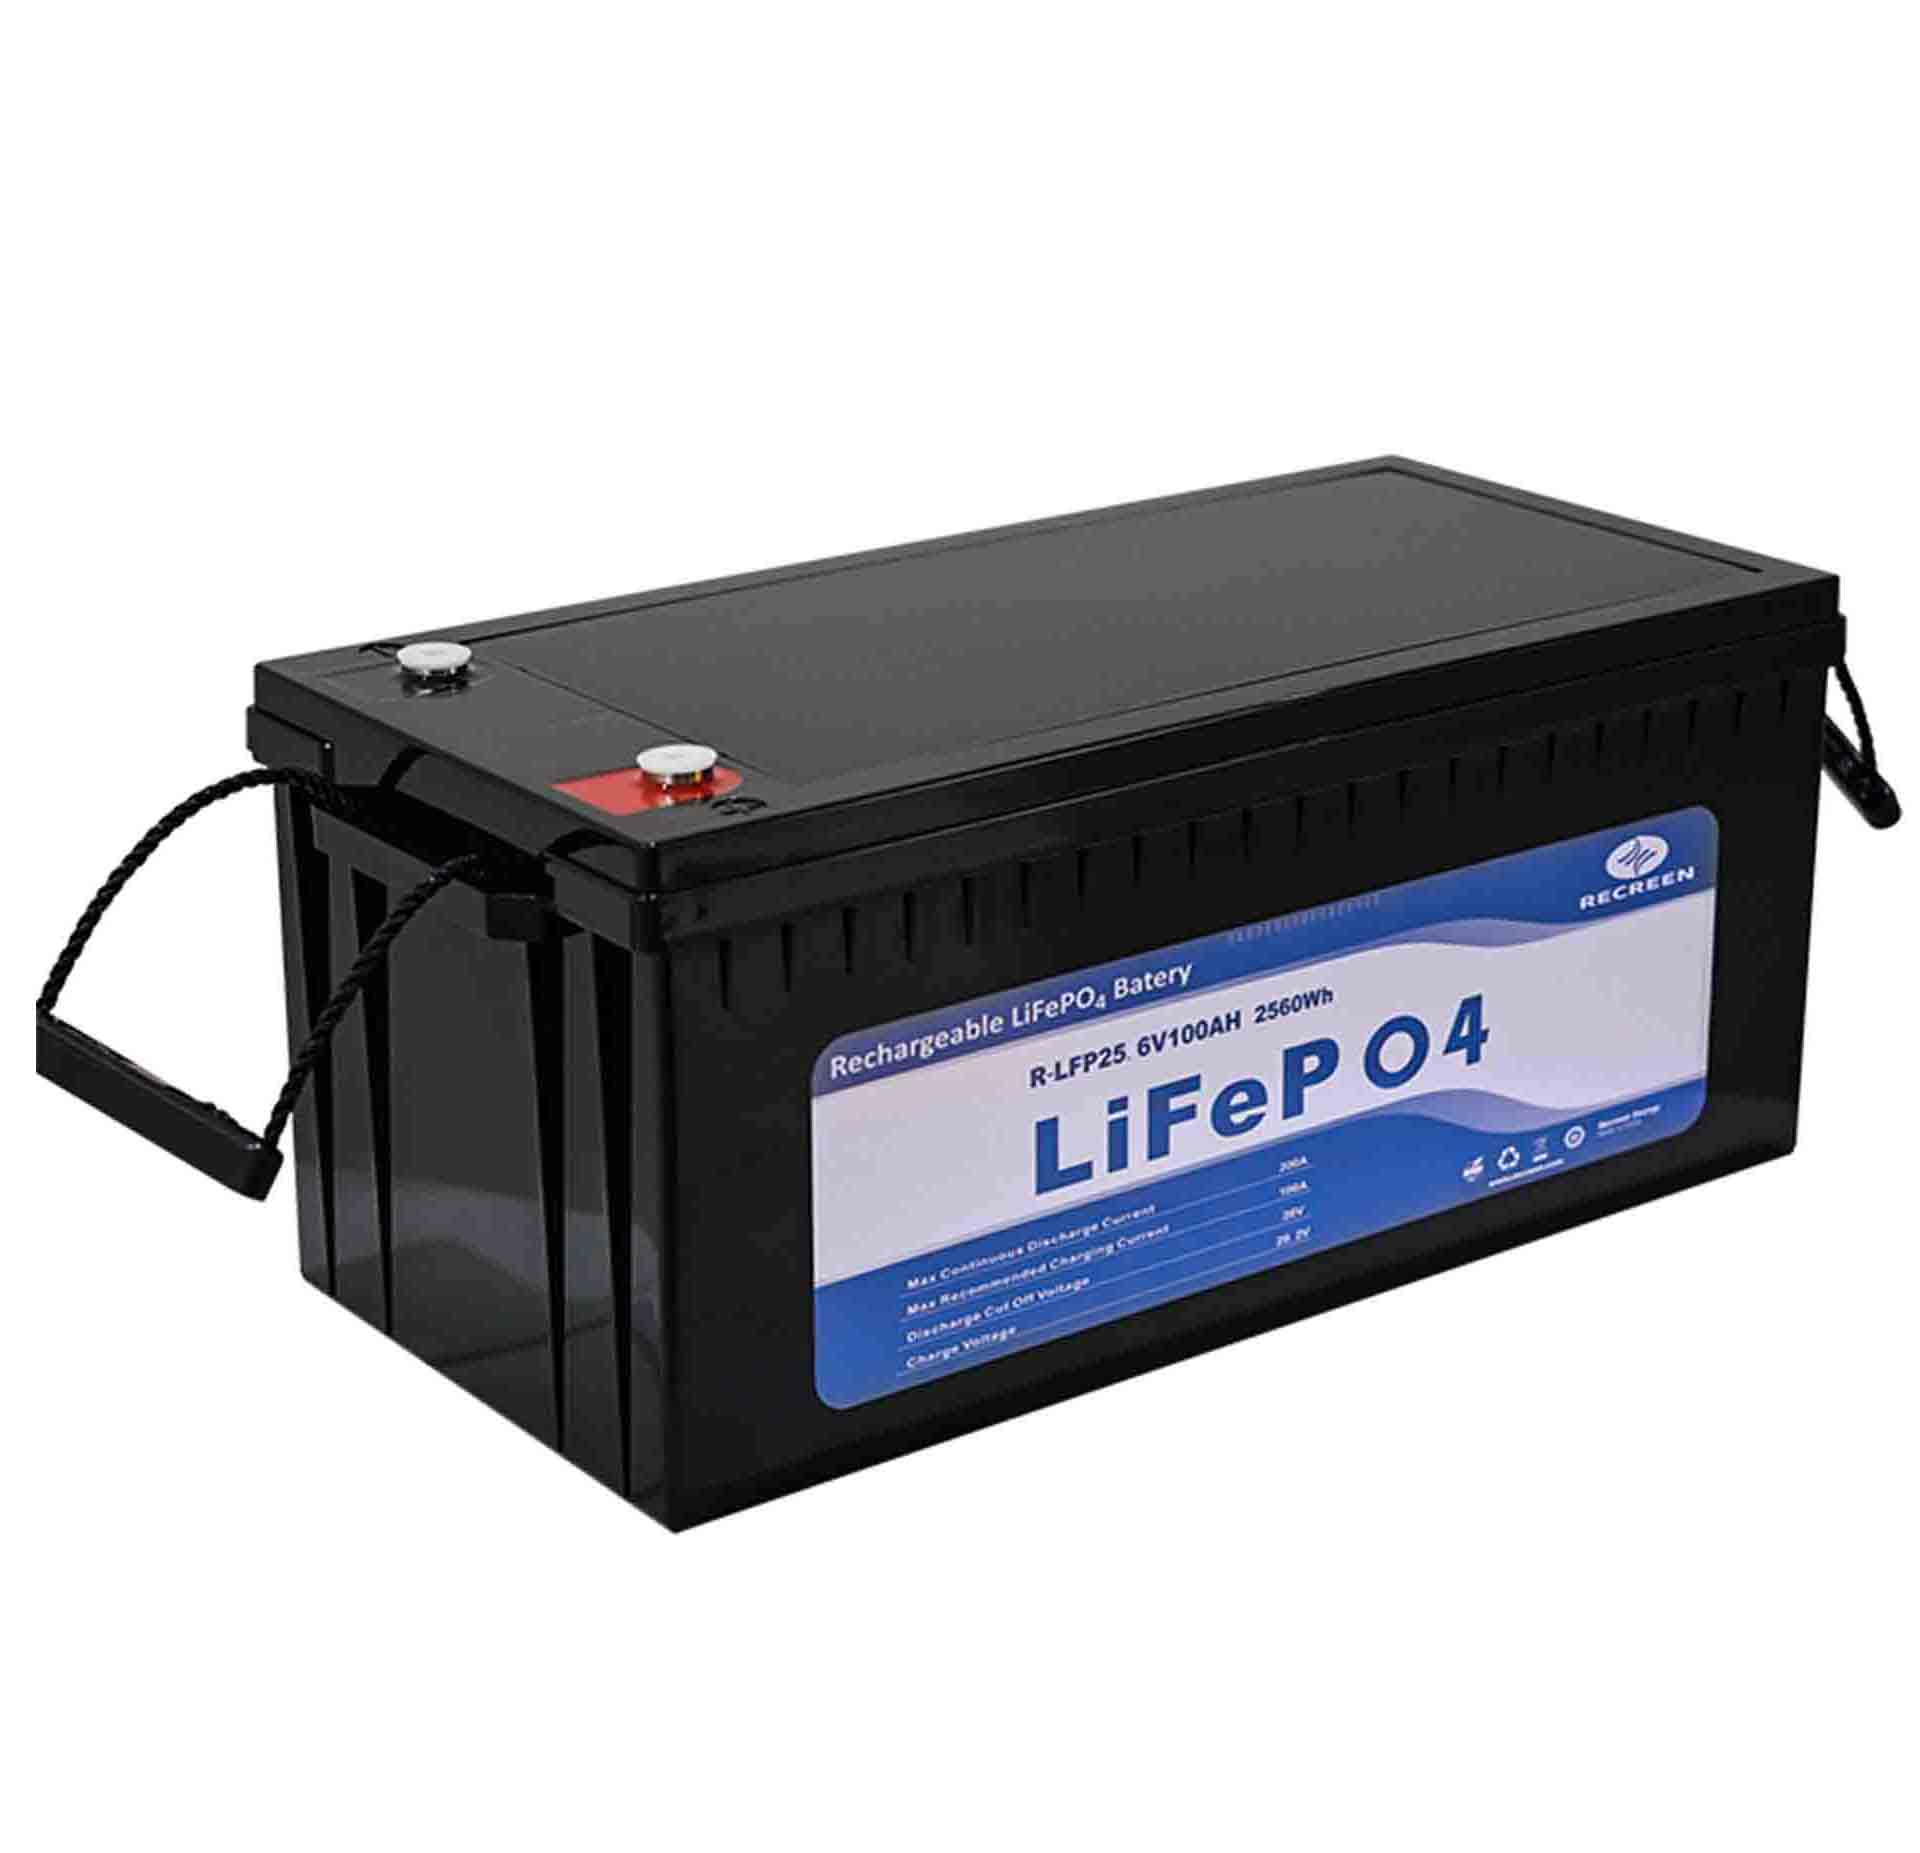 25.6V 100Ah Lithium Battery